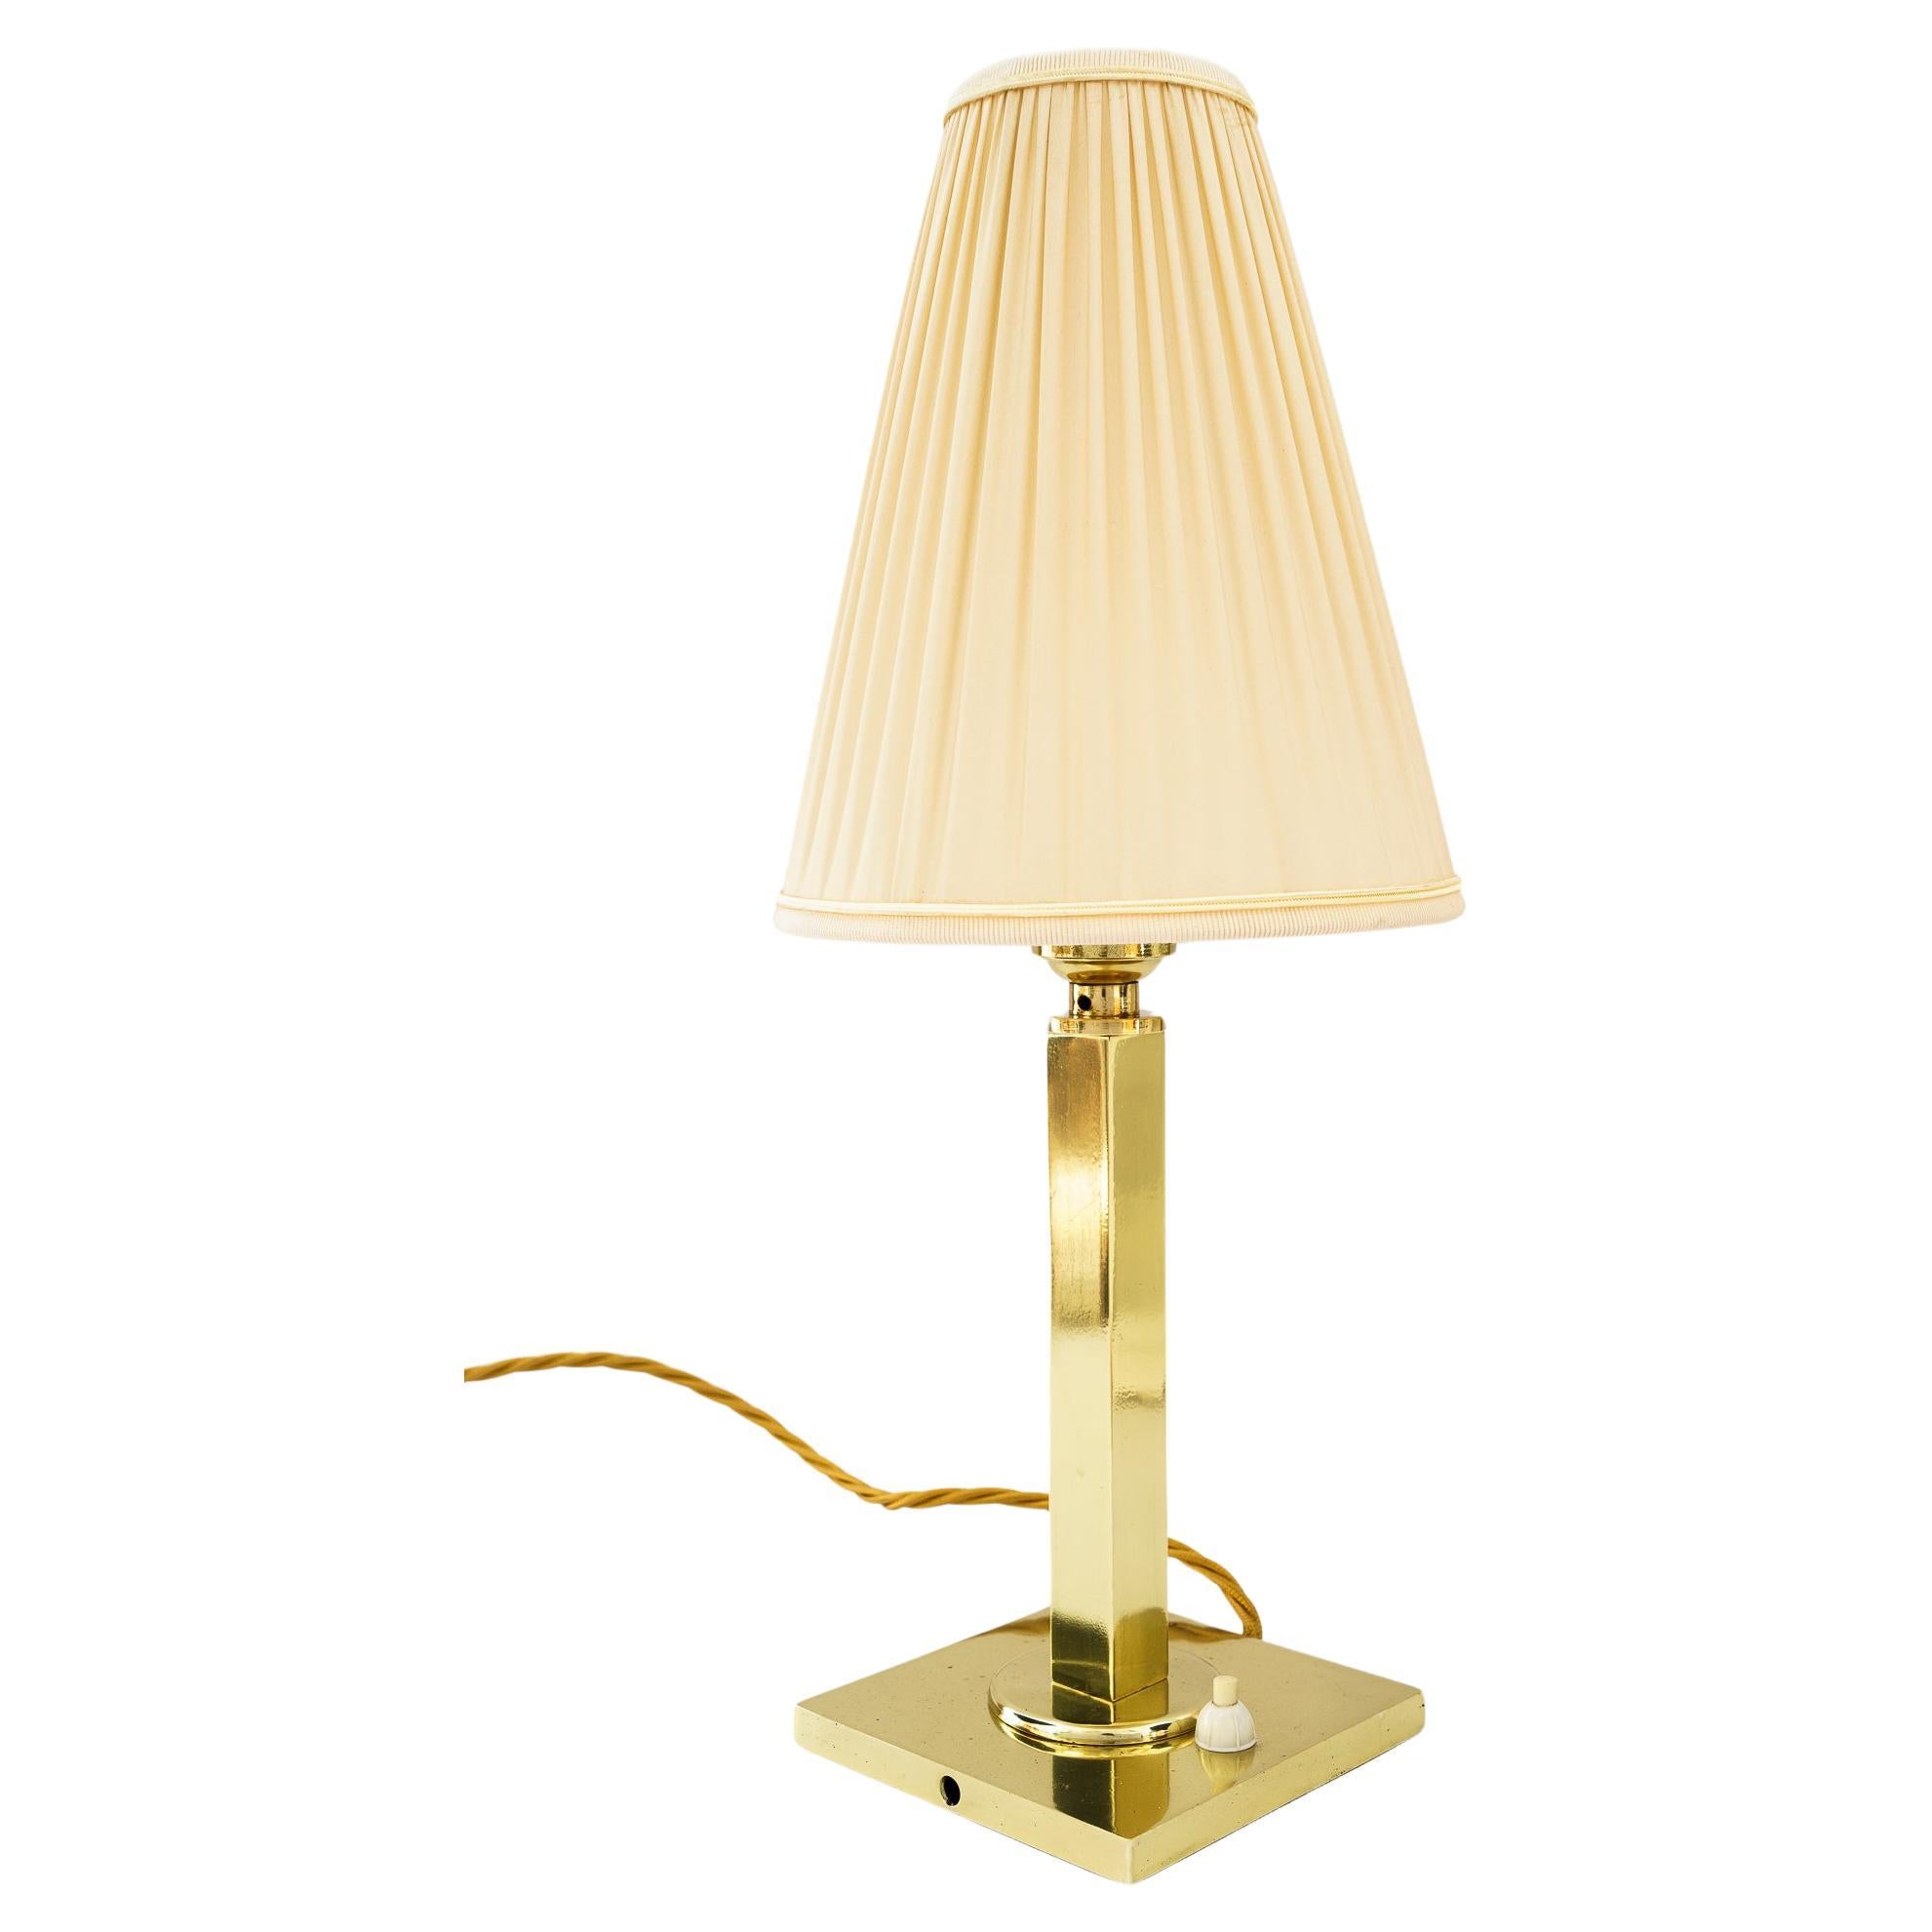 Masive Art Deco Table Lamp with fabric shade vienna around 1920s